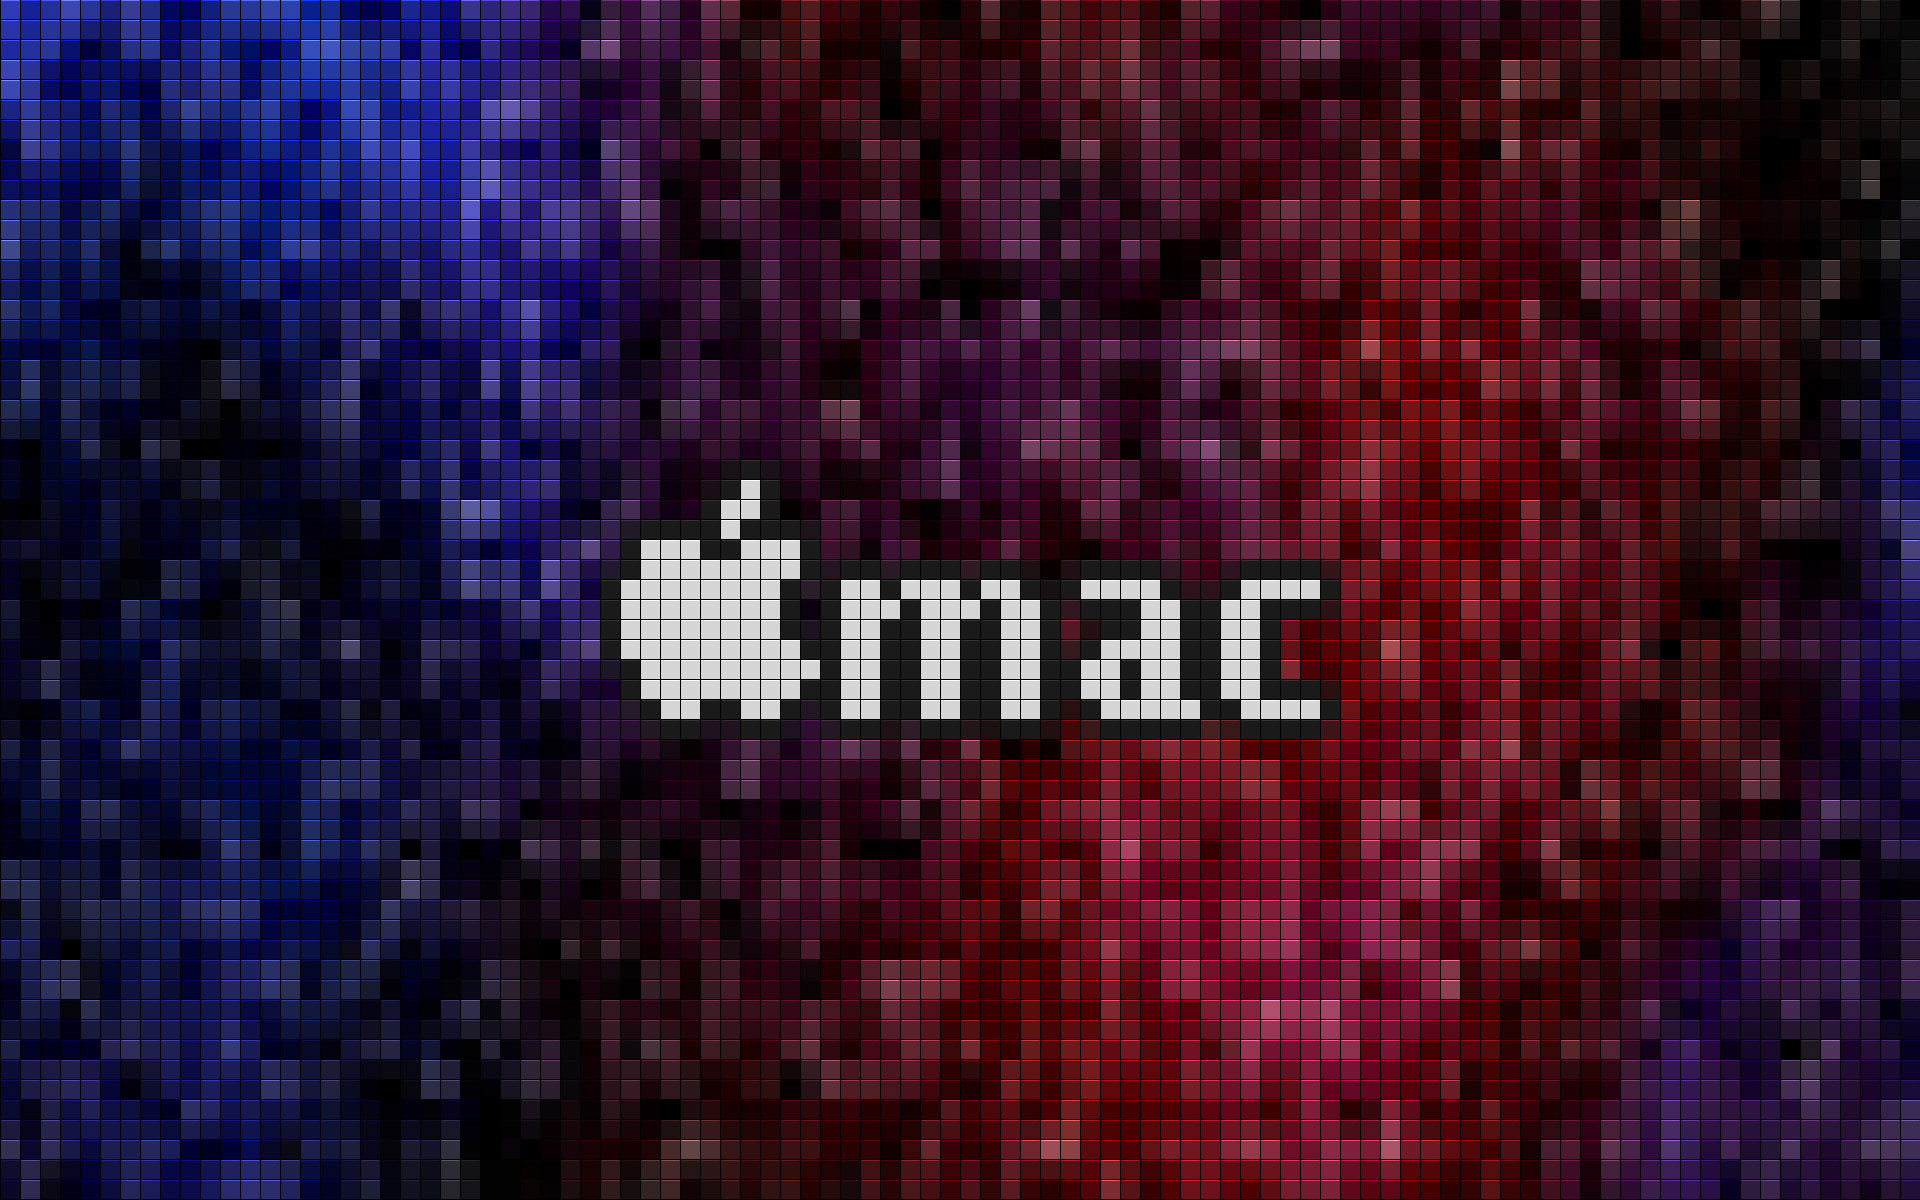 Apple Inc., Mac, pixel art - desktop wallpaper